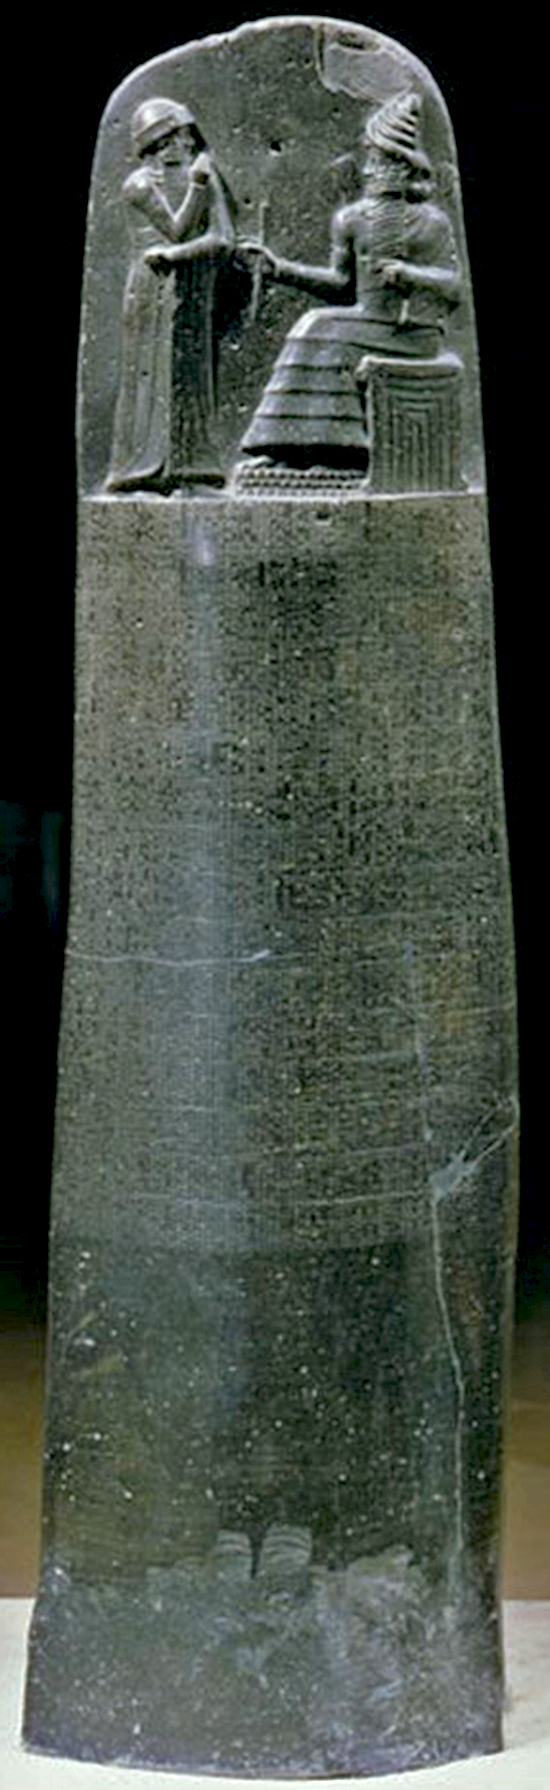 Basalt Stele Containing the Law Code of Hammurabi